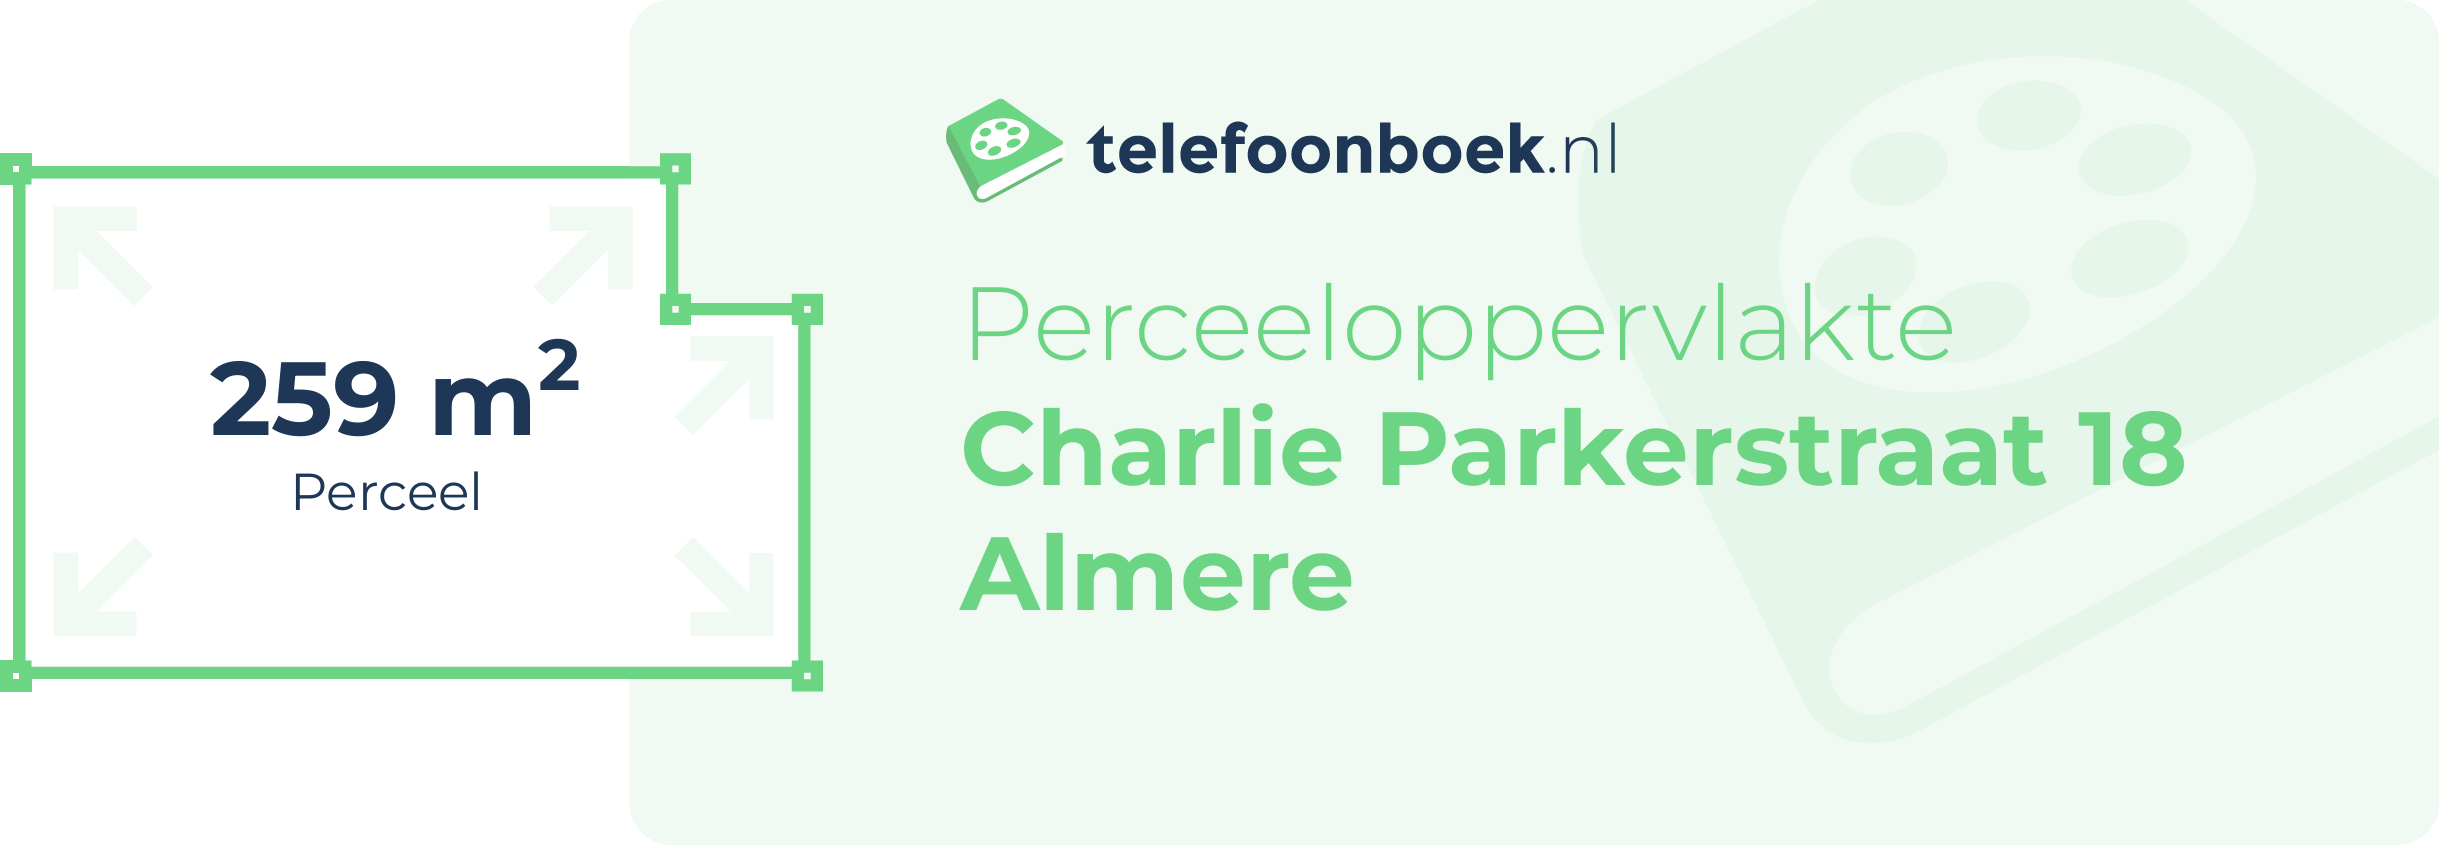 Perceeloppervlakte Charlie Parkerstraat 18 Almere